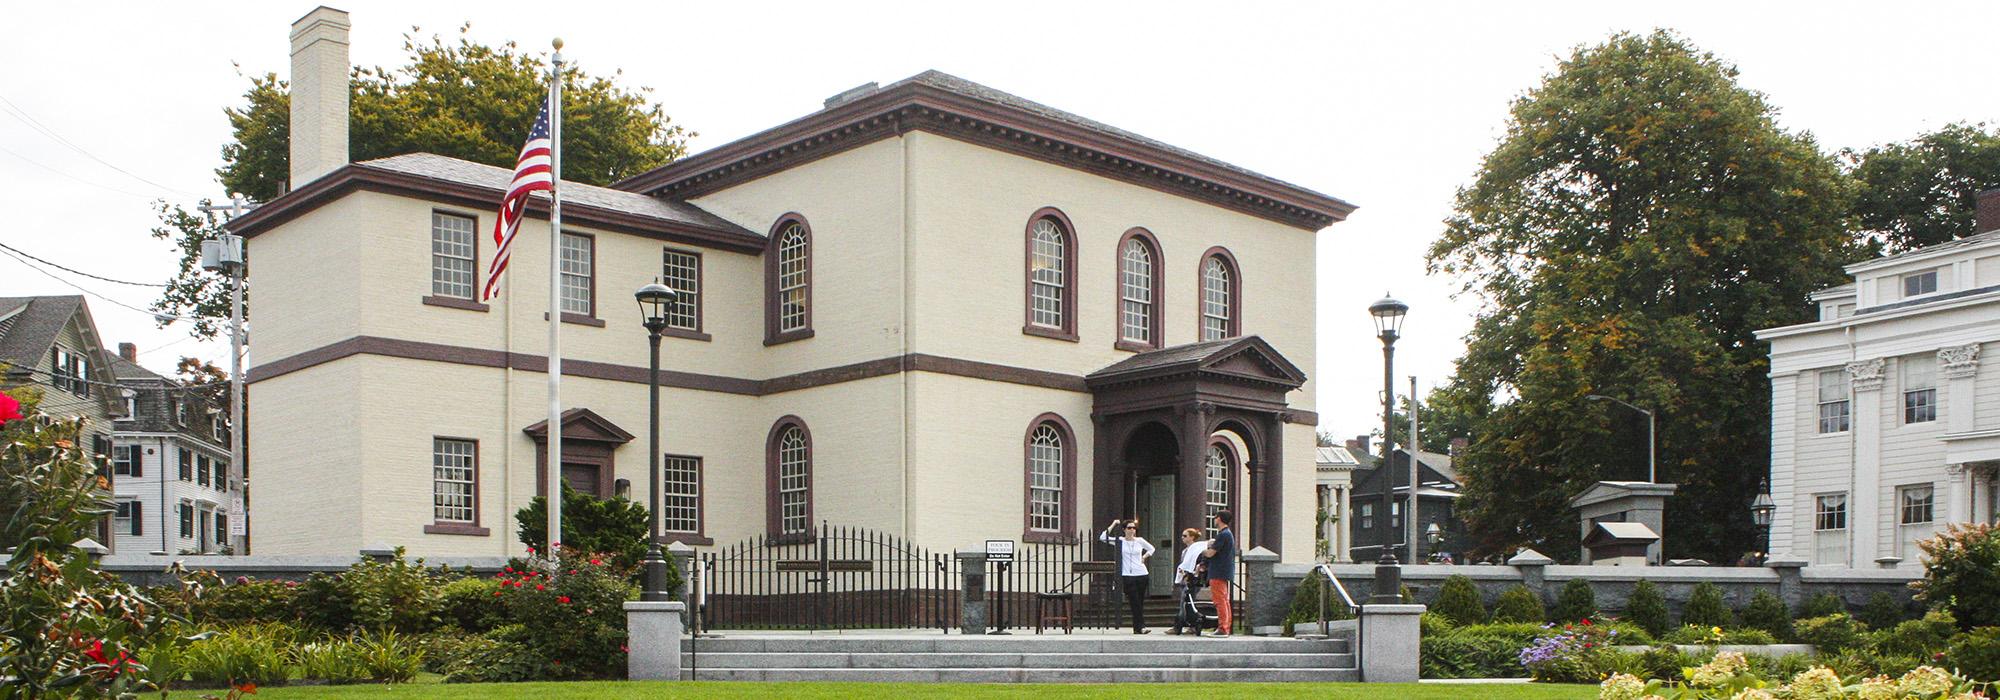 Touro Synagogue National Historic Site, Newport, RI